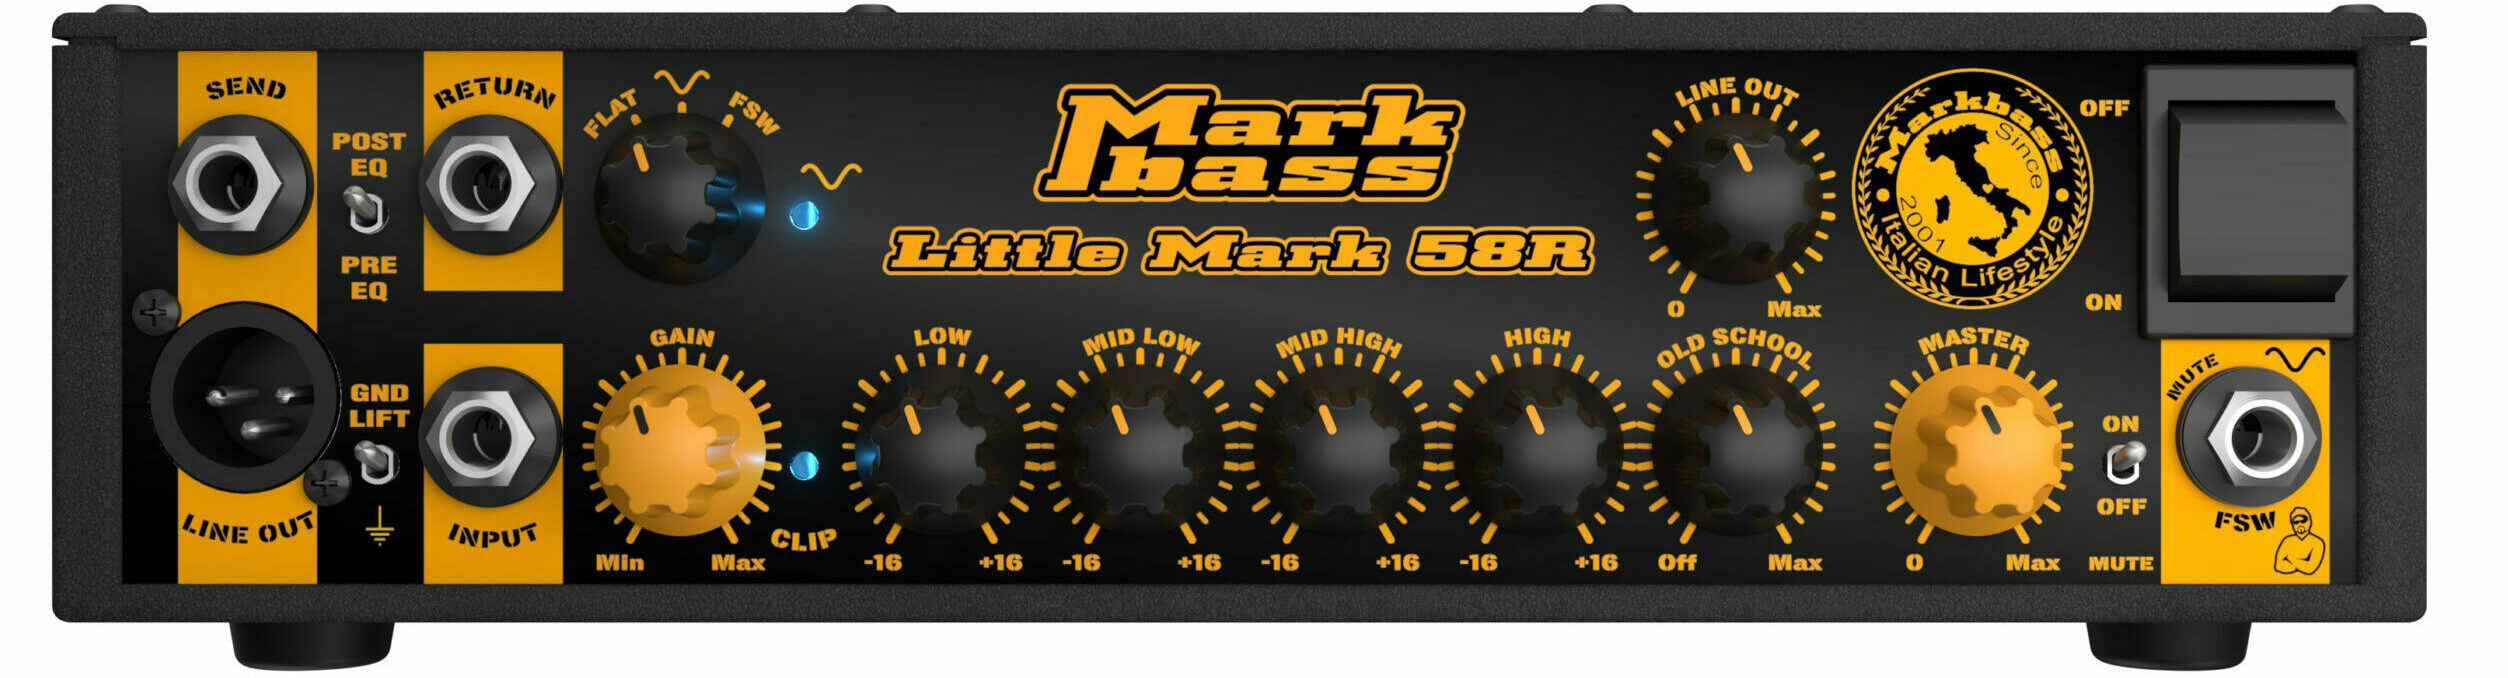 Markbass Little Mark 58r Head 500w - TÊte Ampli Basse - Variation 1